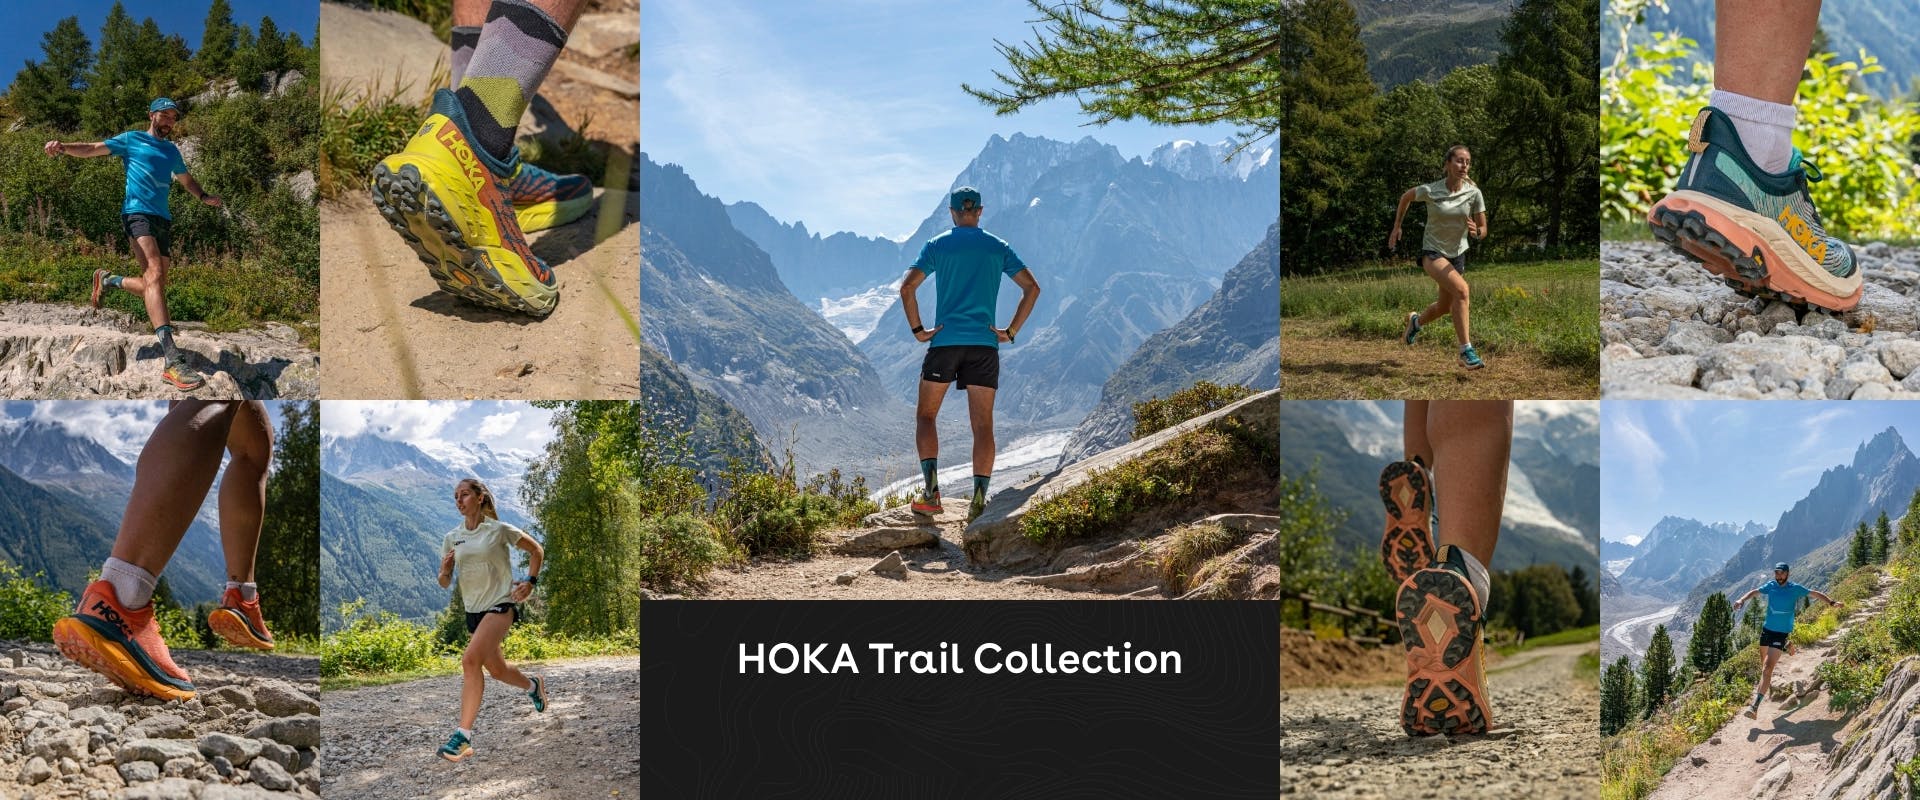 Hoka Trail Collection